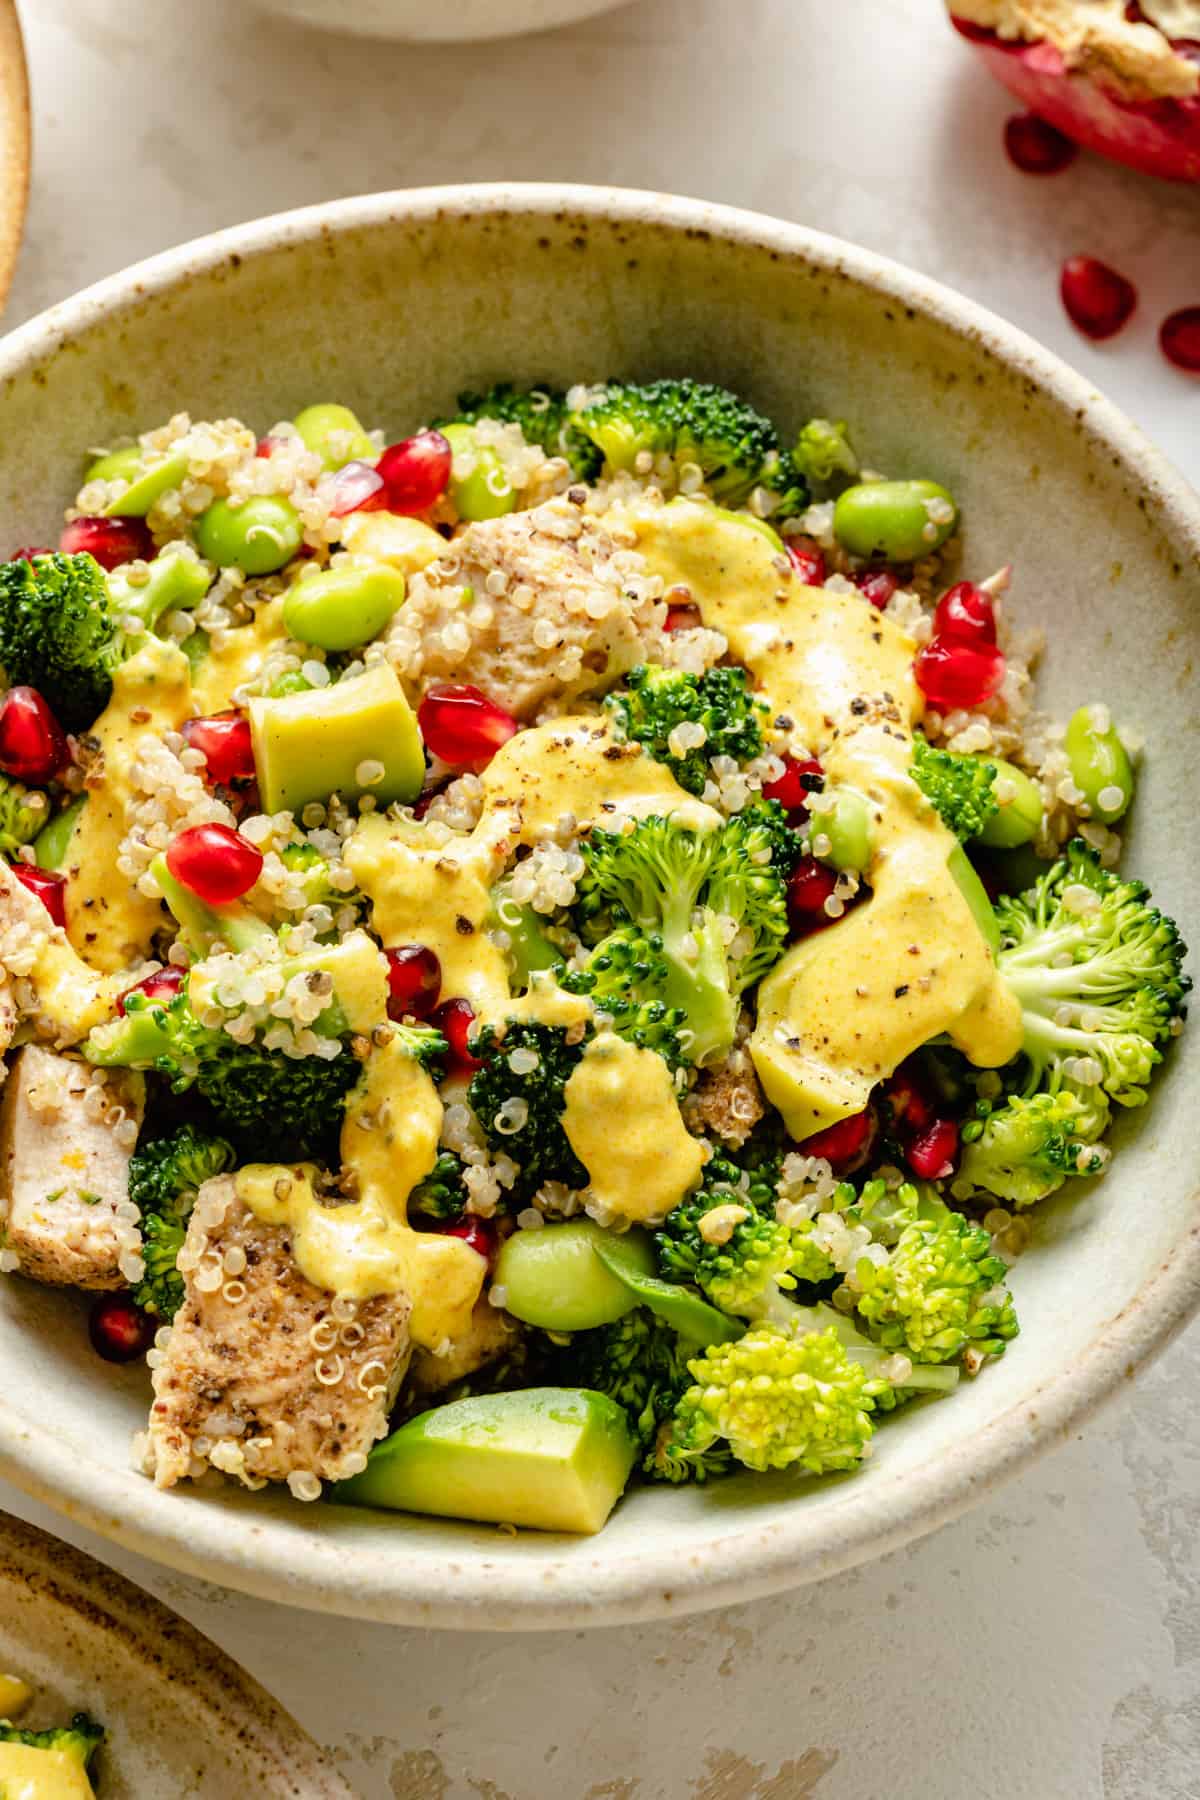 Chicken quinoa salad in a bowl showing broccoli, avocado and pomegranate arils.